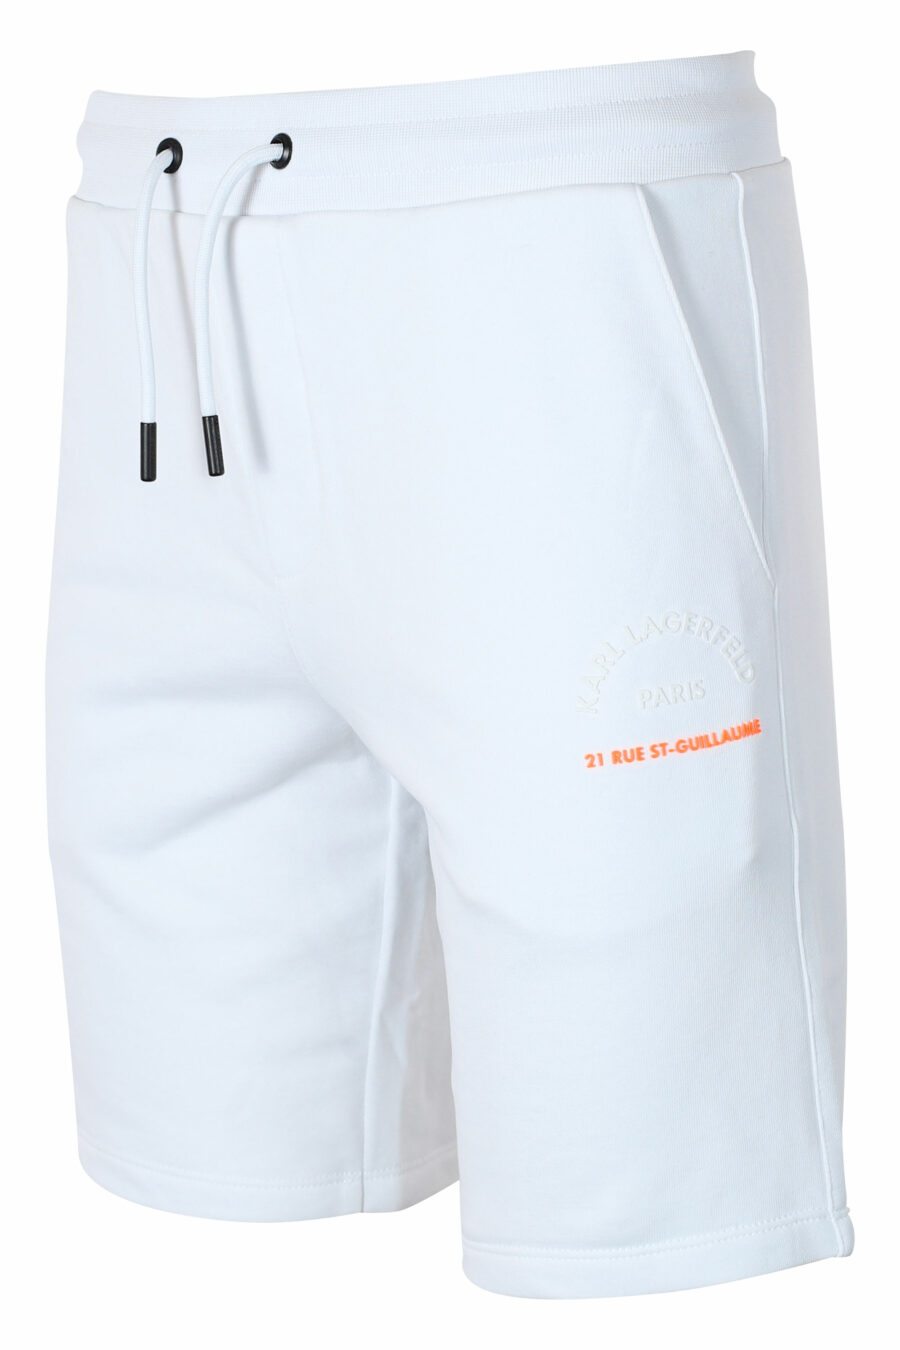 Pantalón de chándal blanco corto con minilogo "rue st guillaume" naranja - IMG 9560